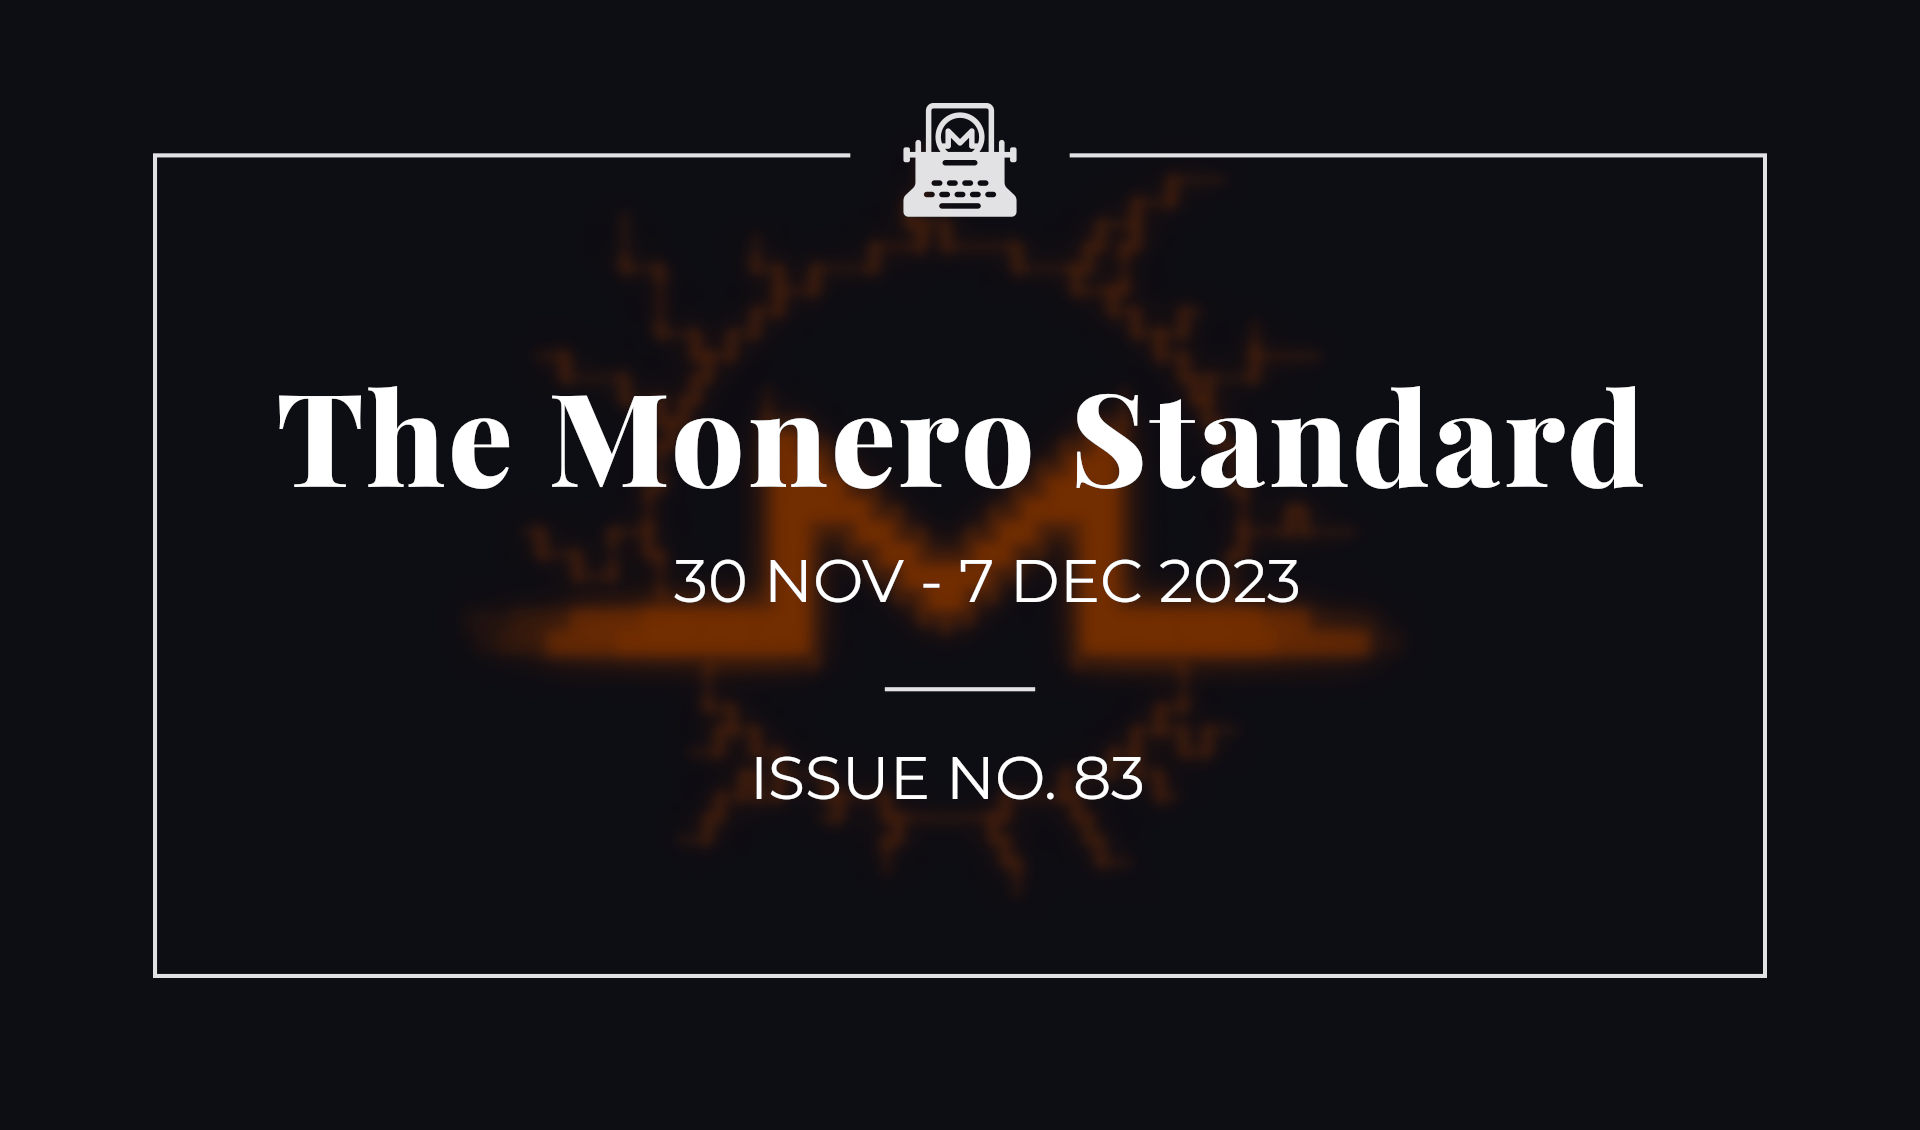 The Monero Standard #83: 30 Nov 2023 - 7 Dec 2023